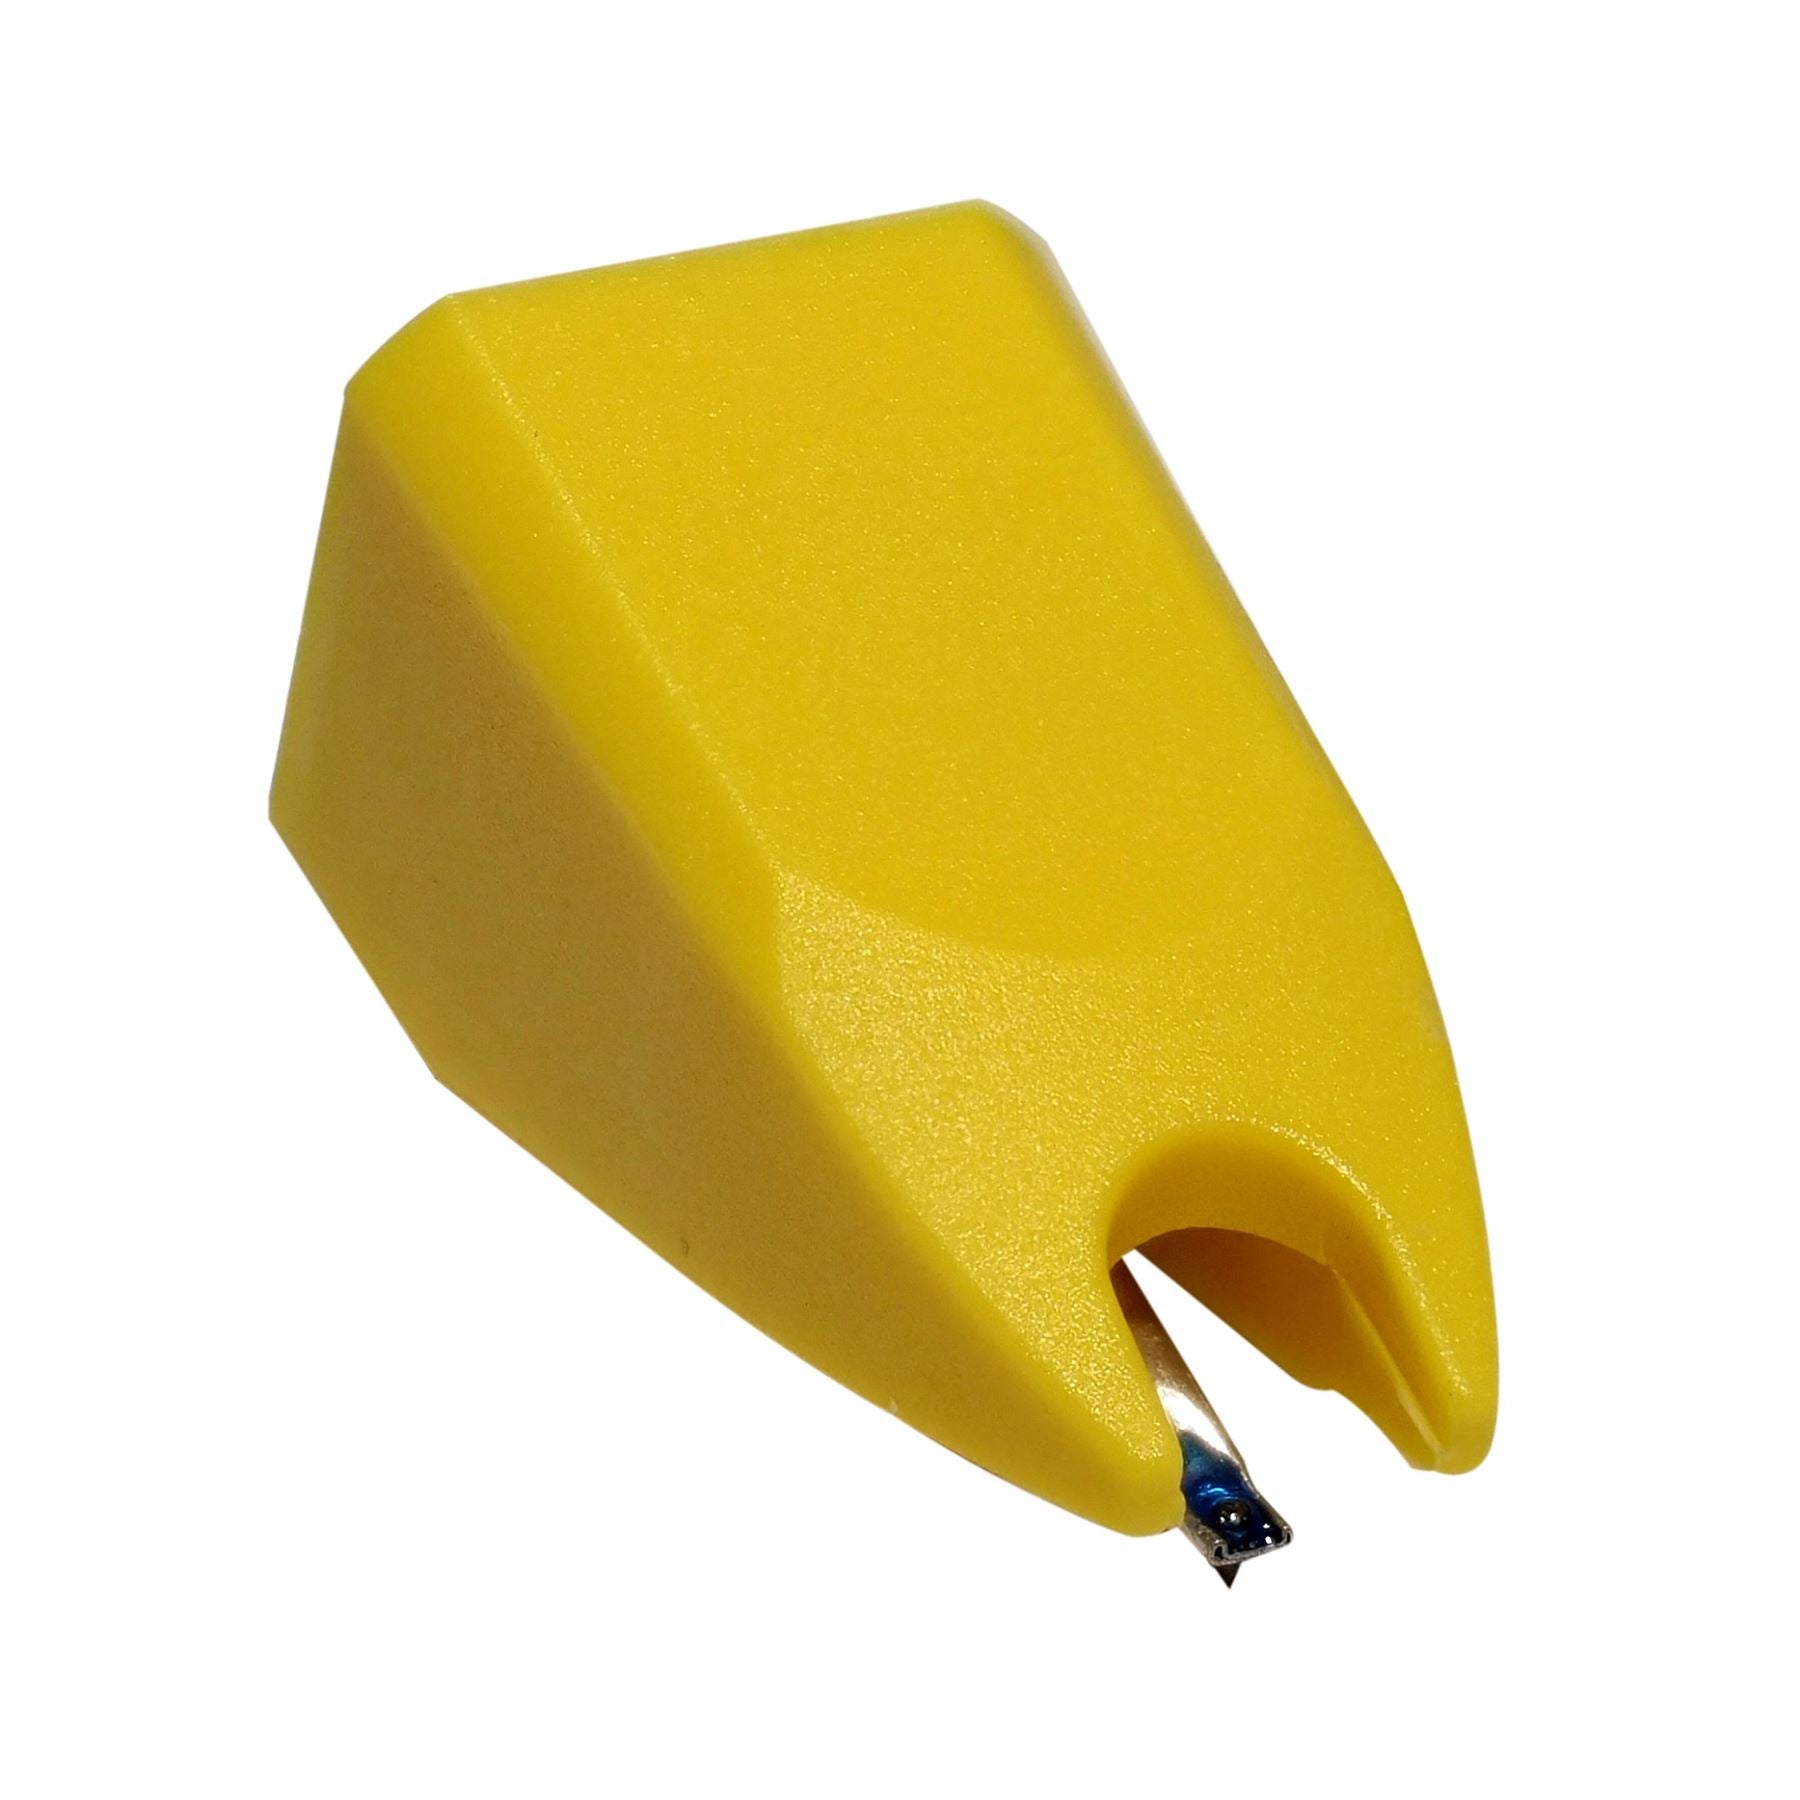 Ortofon Pick It Sonar Moving Magnet Phono Cartridge for The Beatles Yellow